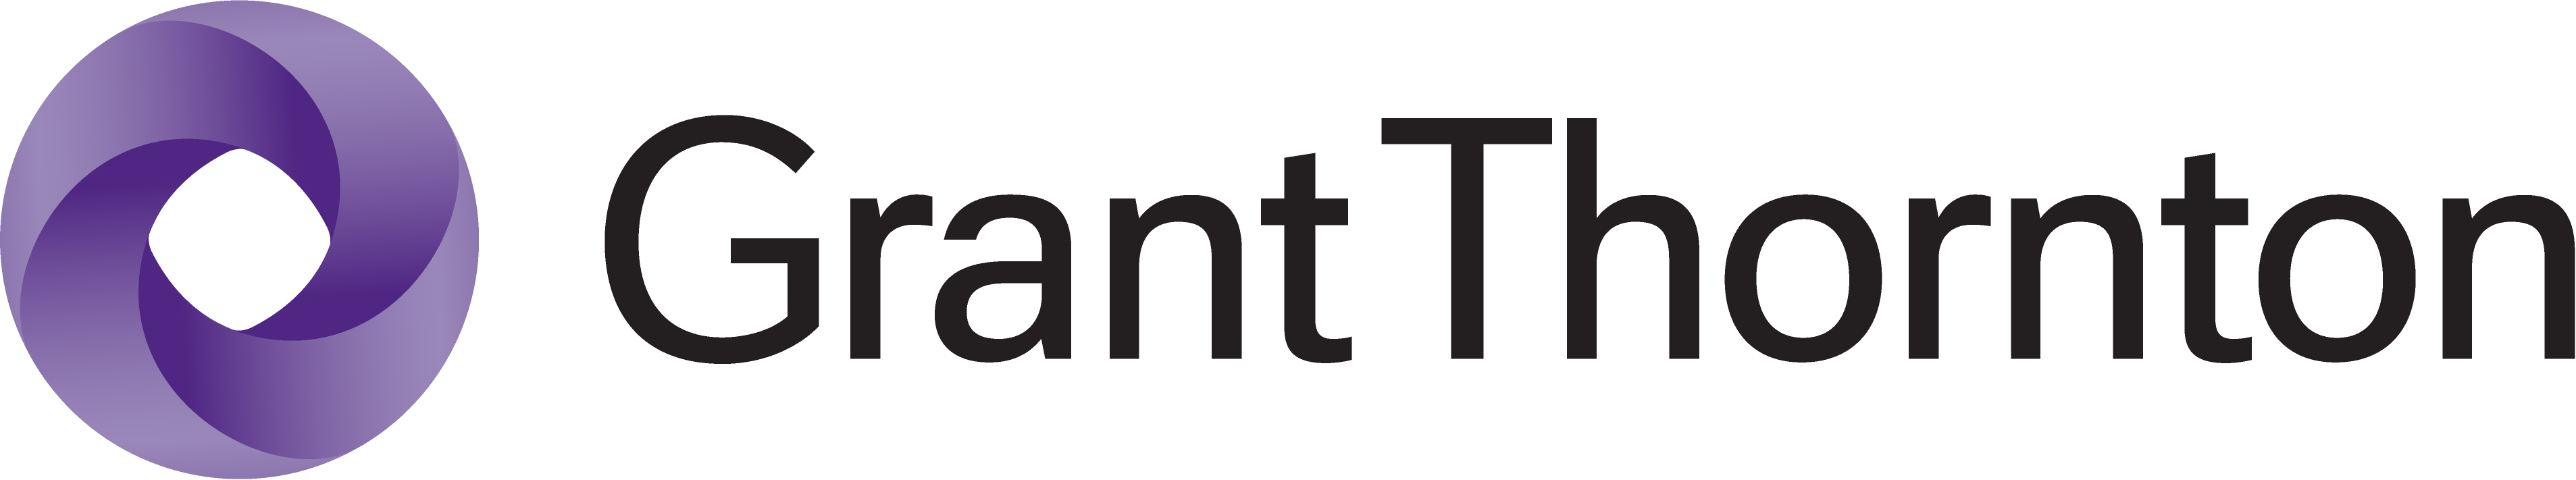 Grant Thornton LLP logo